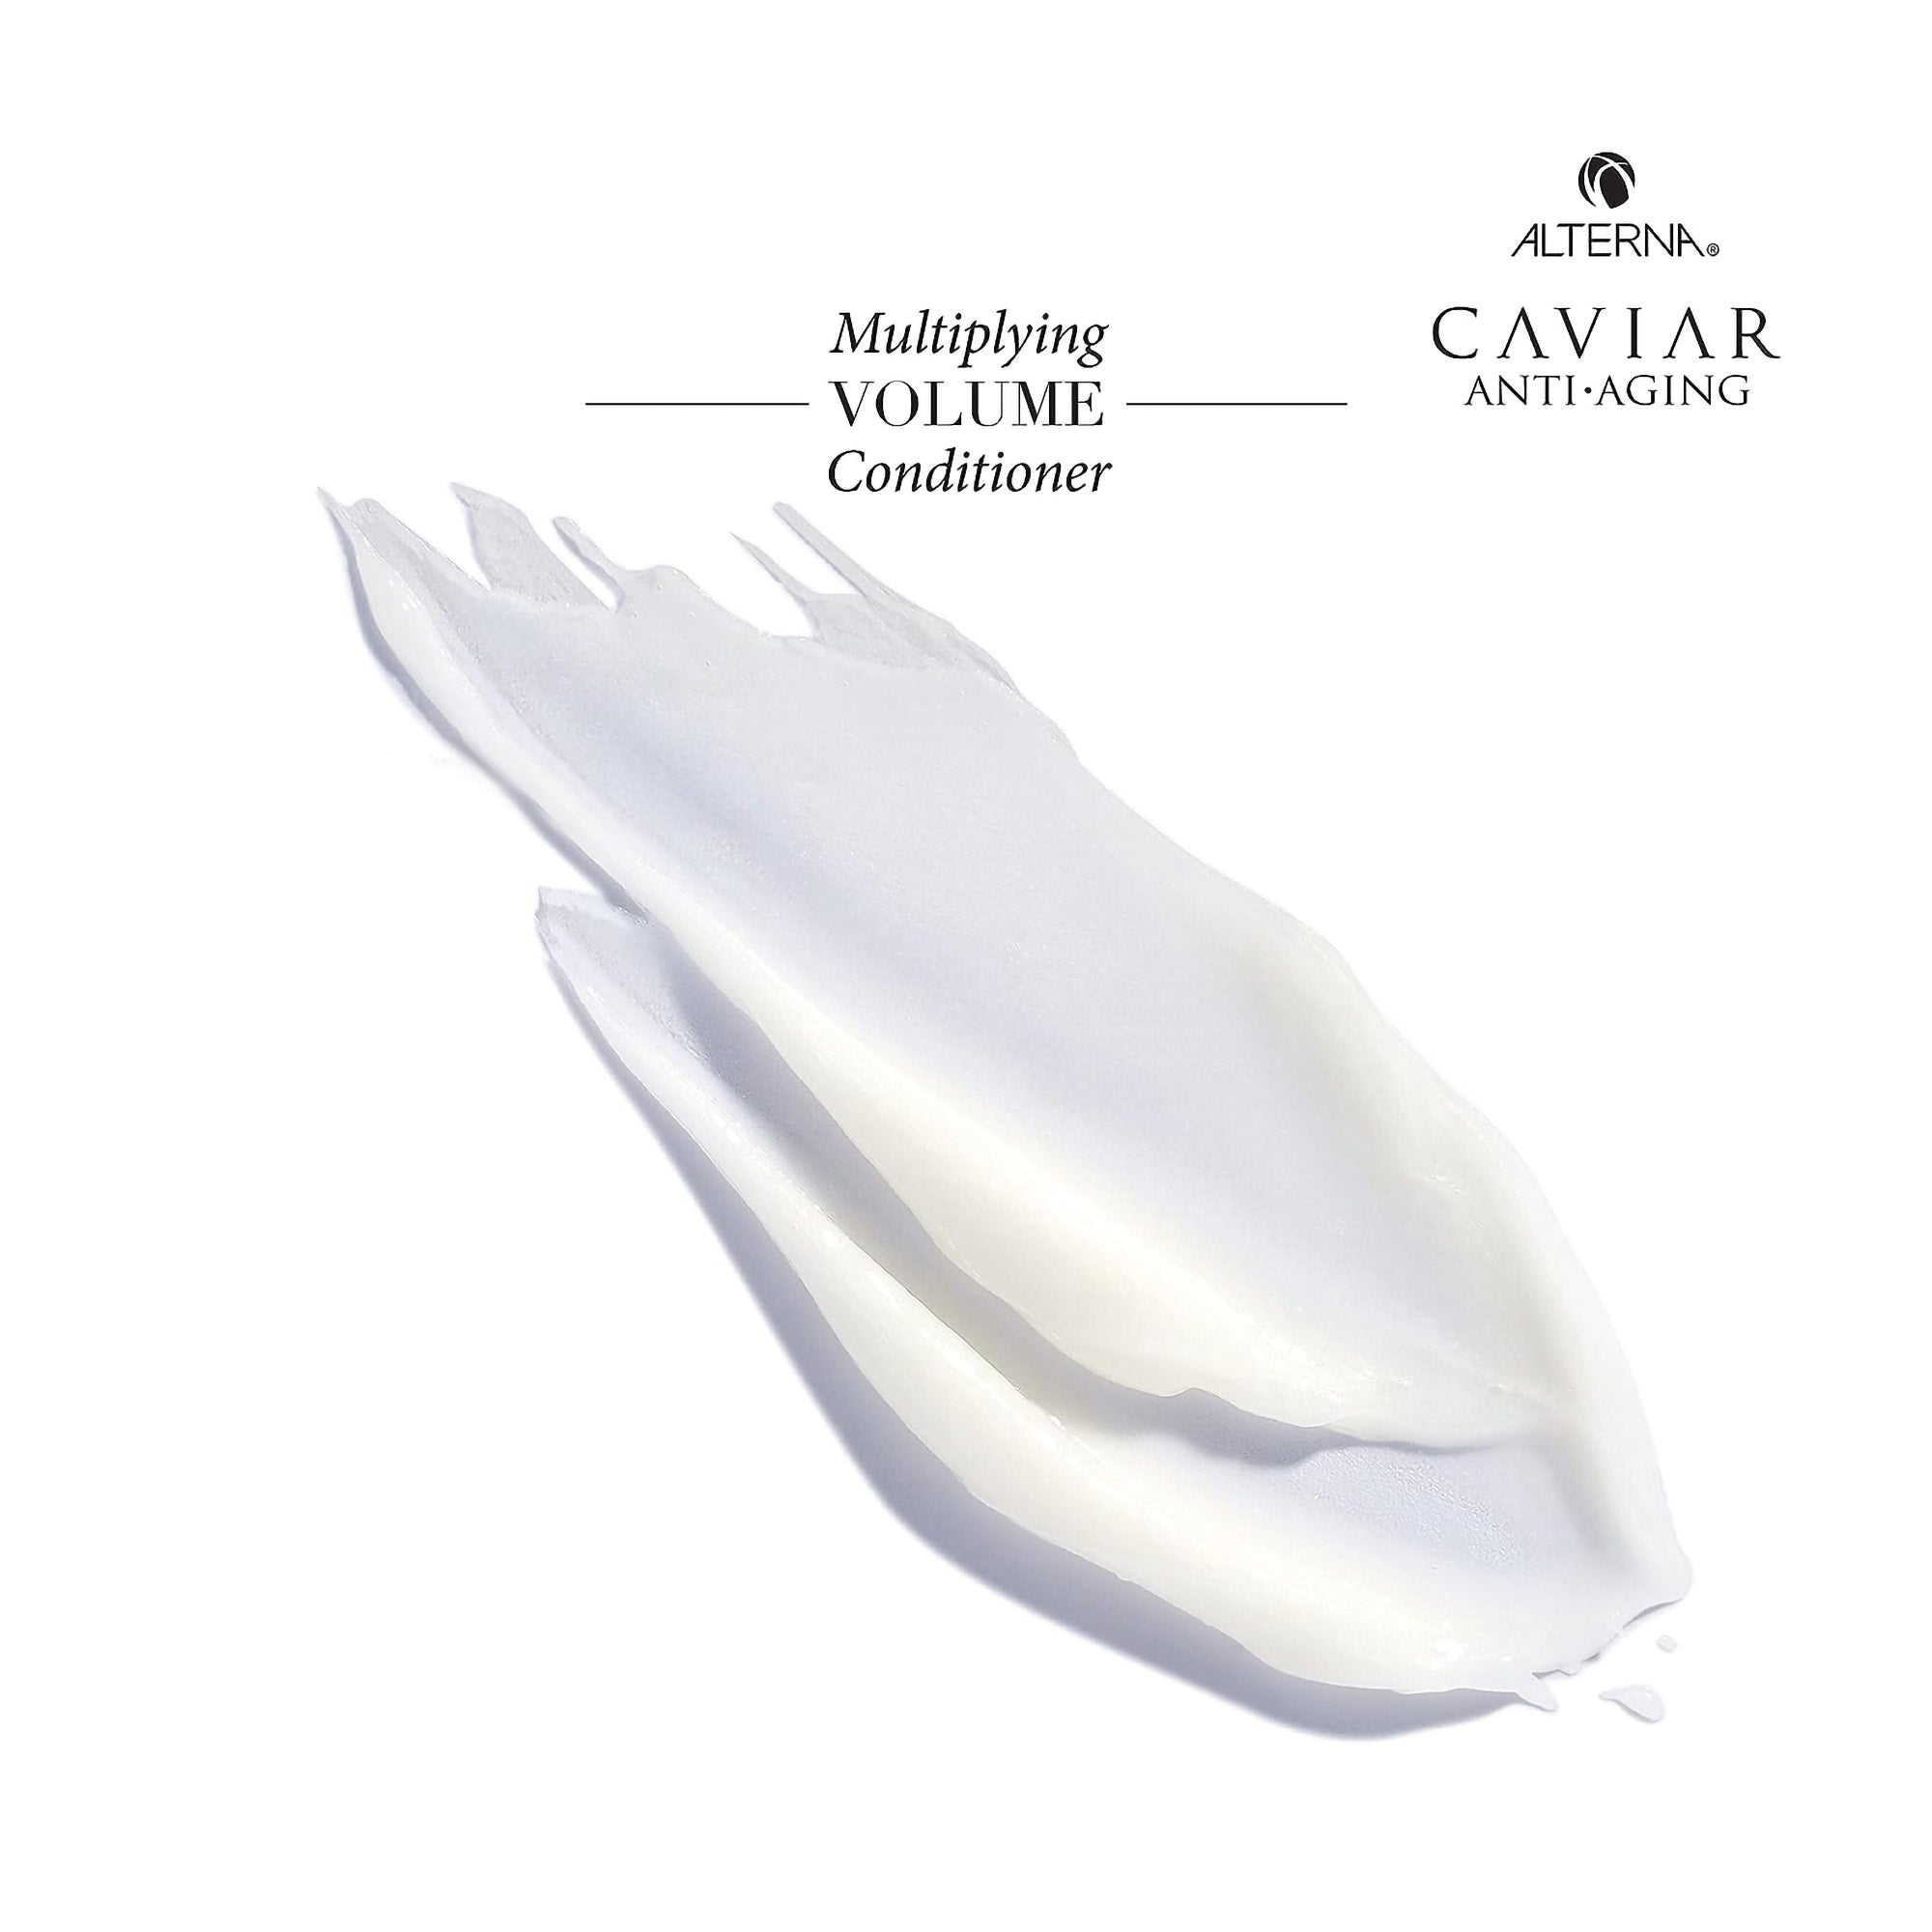 Alterna Caviar Anti-aging Multiplying Volume Conditioner - 33oz / 33OZ